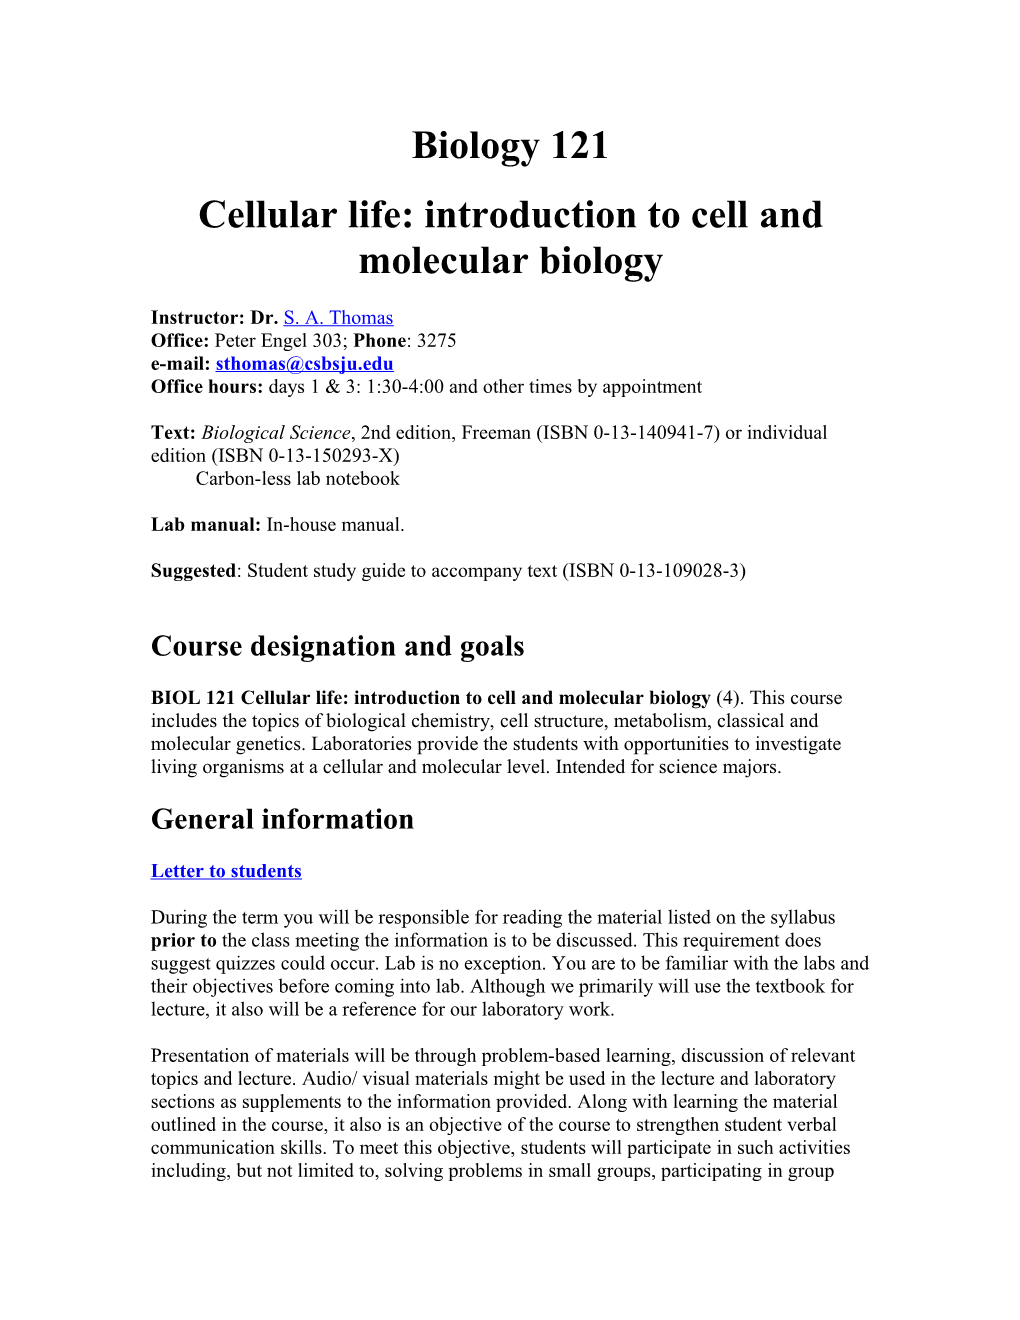 Cellular Life: Introduction to Celland Molecular Biology